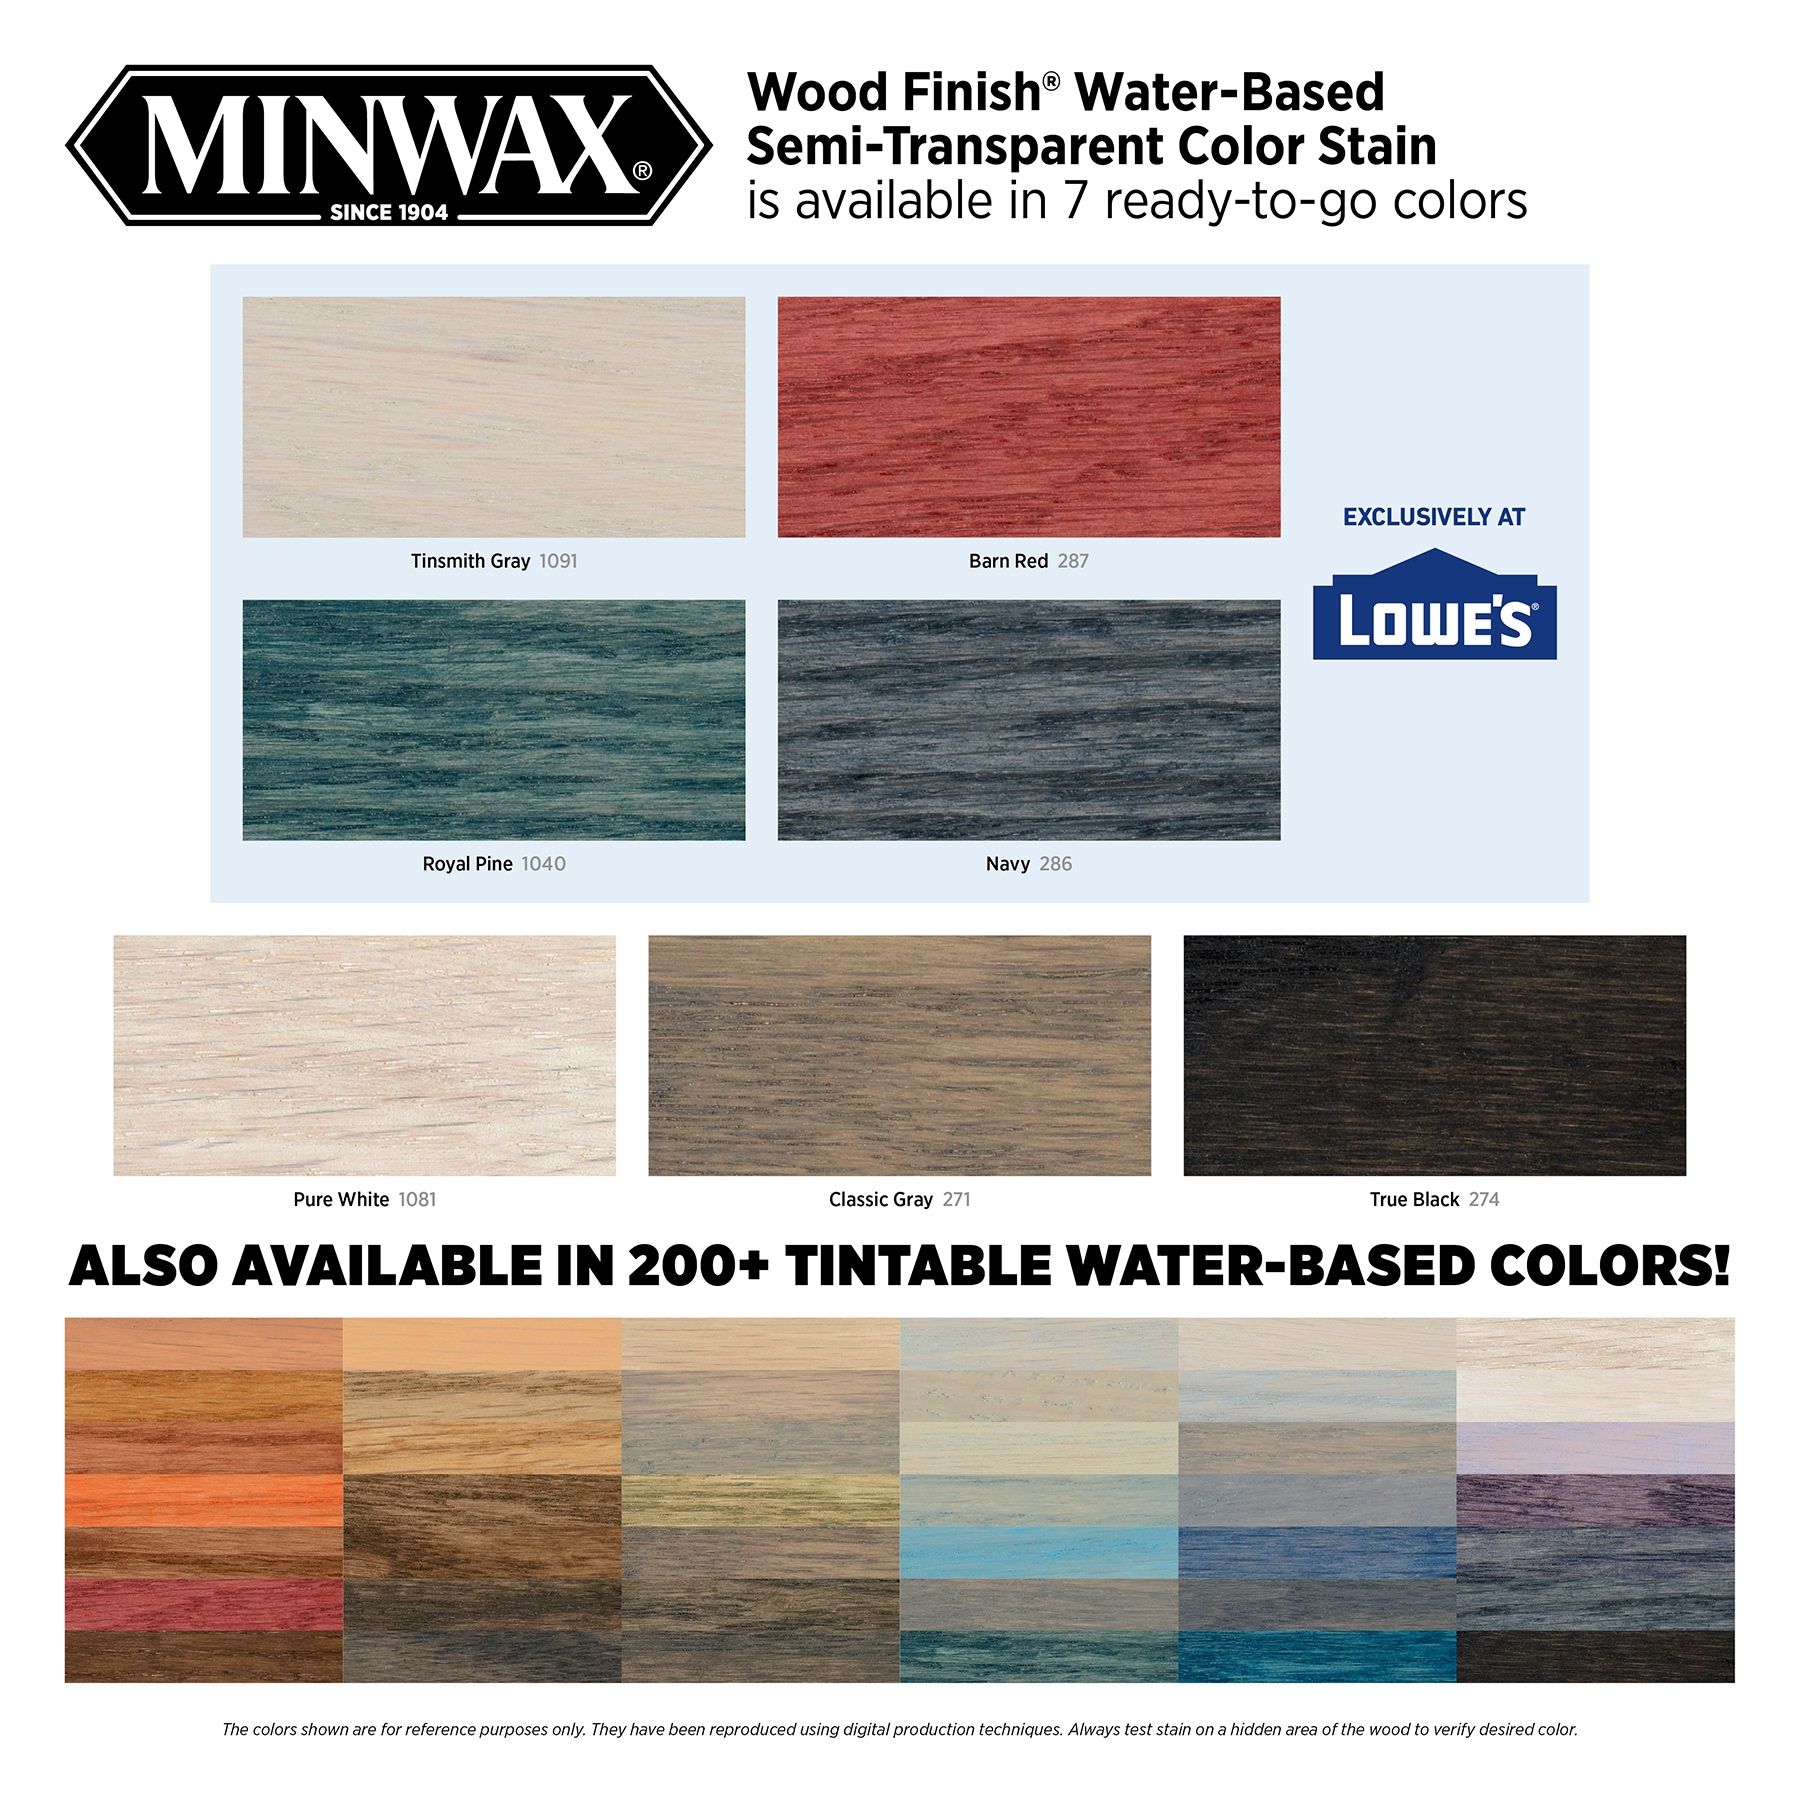 Minwax One Coat Polyurethane Clear Gloss Water-based Polyurethane